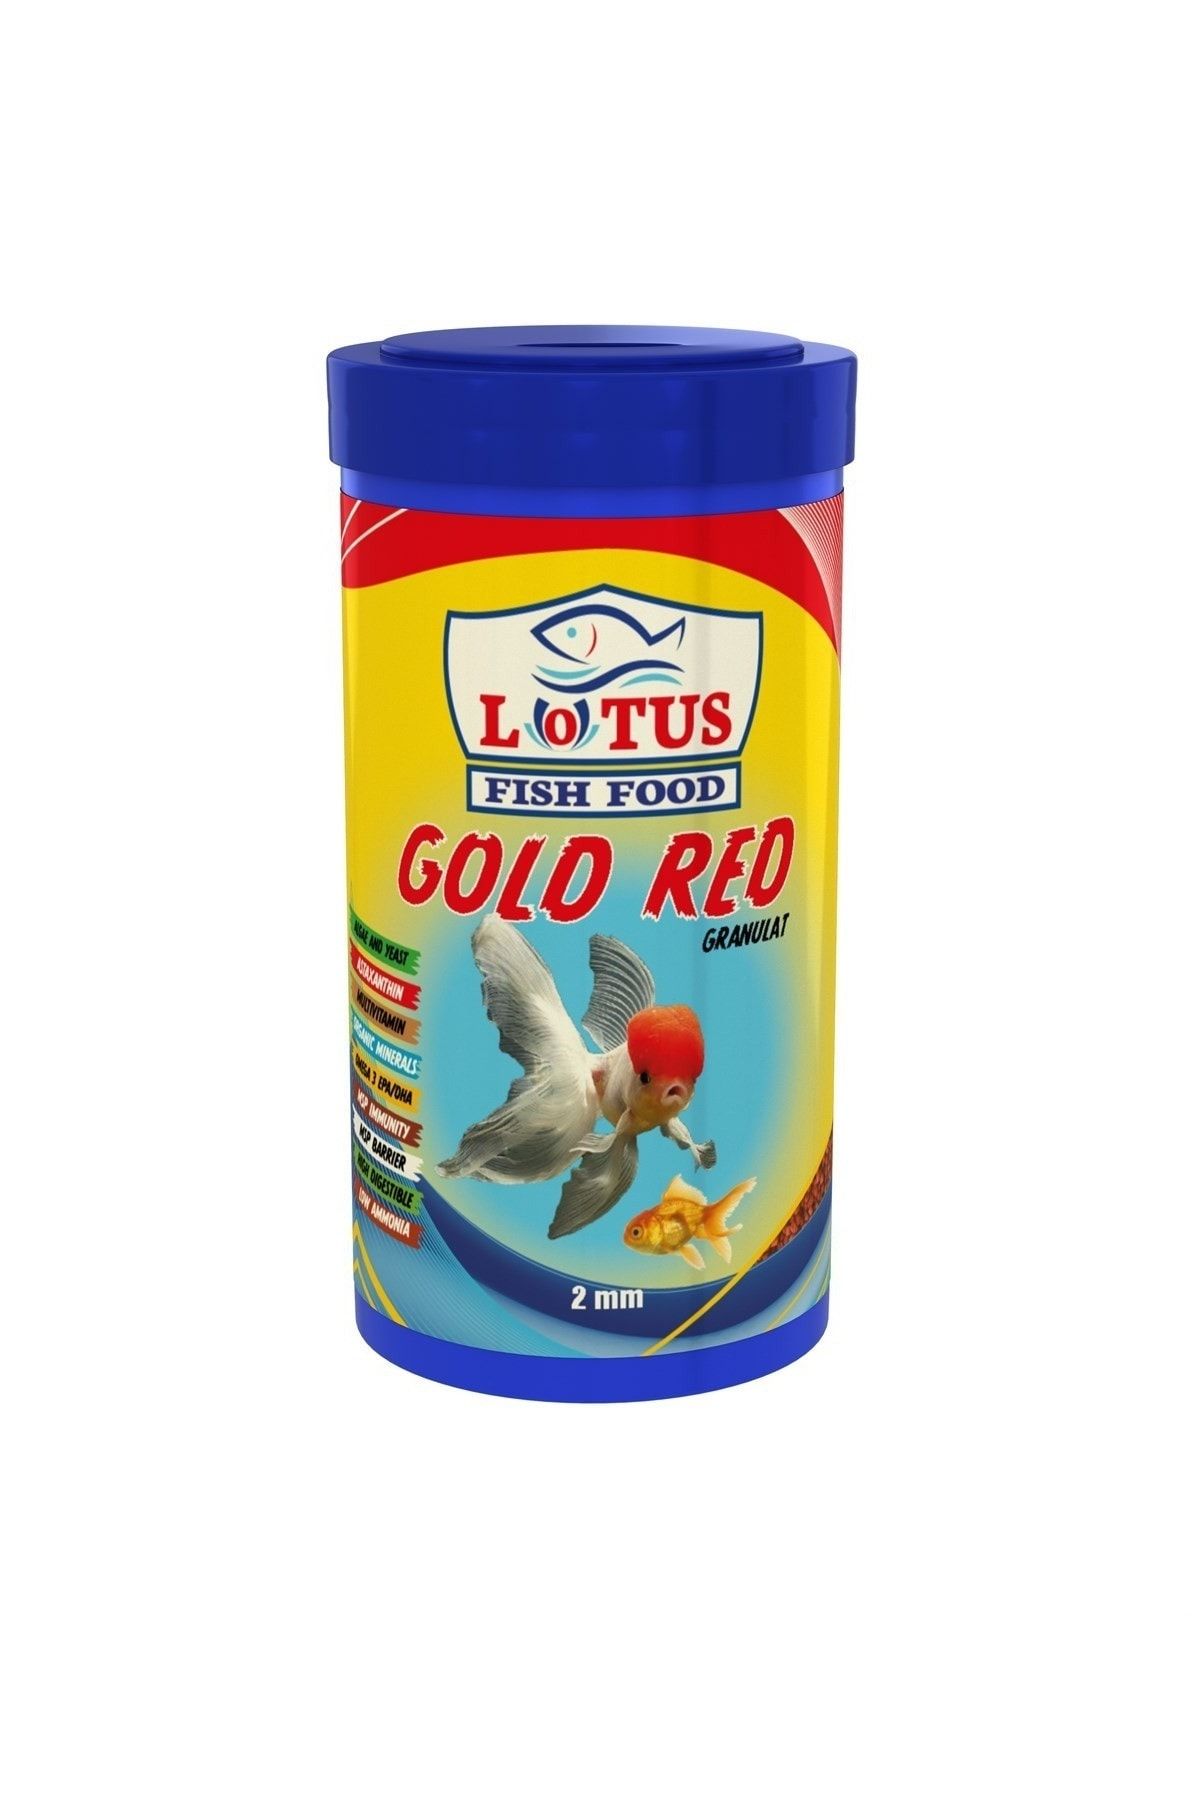 Lotus Gold Red Granül Japon Balığı Renk Yemi 250ml